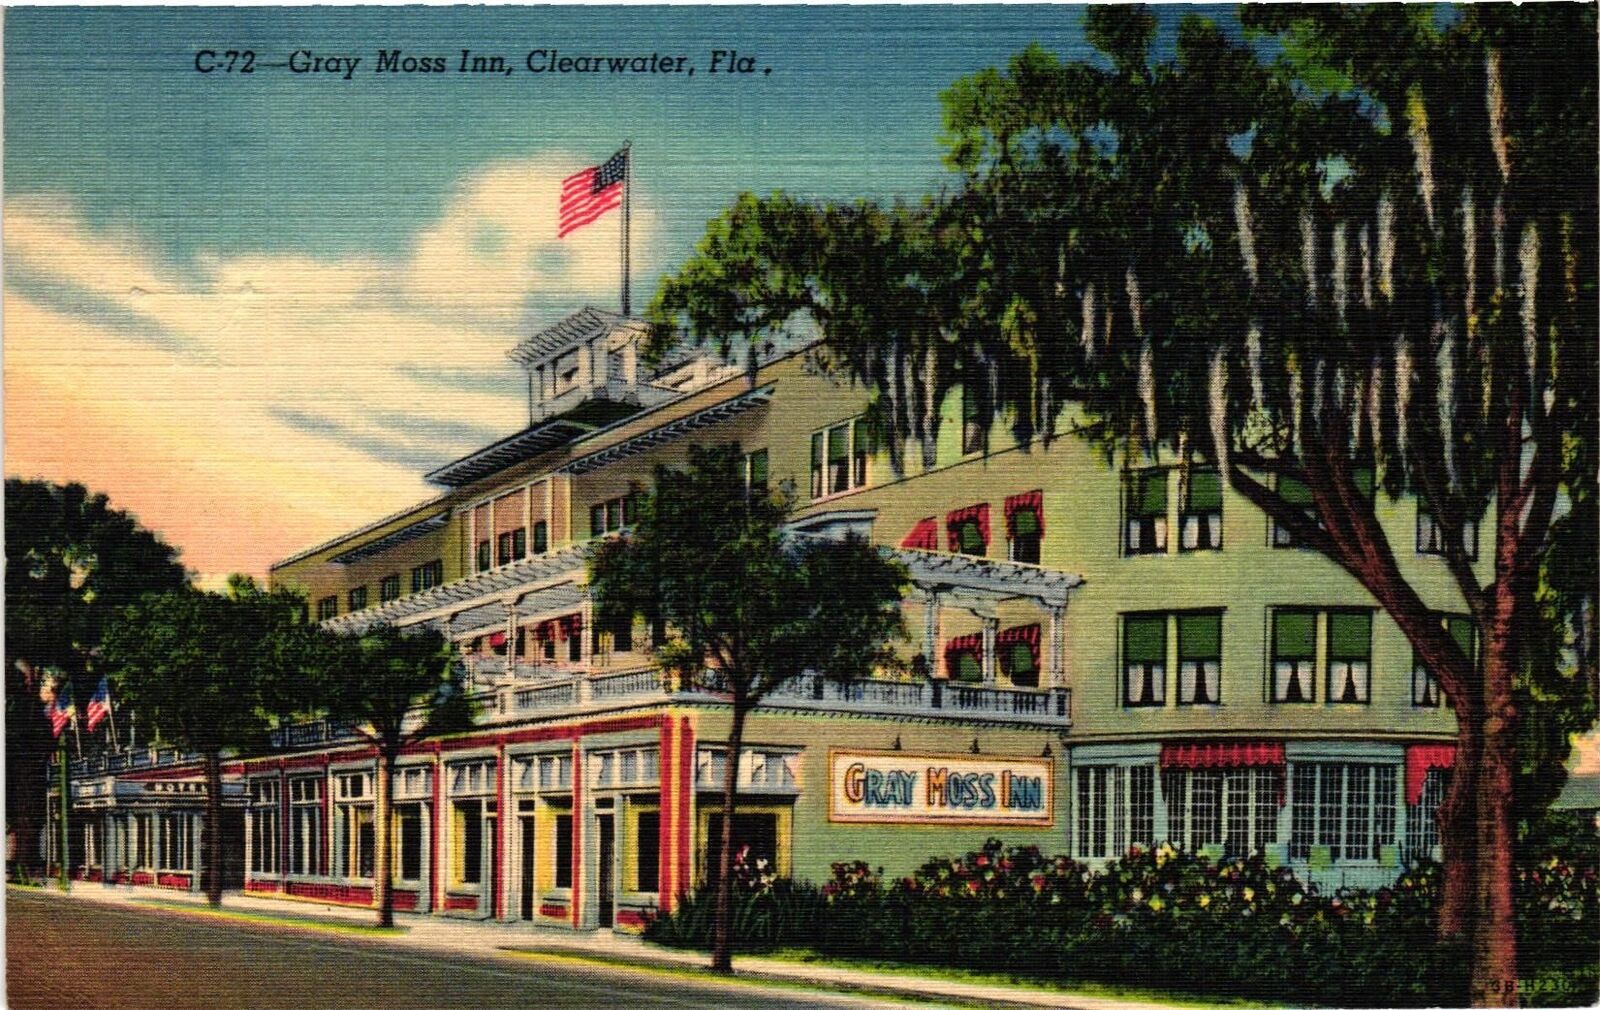 VTG Postcard- C-72. Gray Moss Inn, Clearwater, Fla. Unused 1930